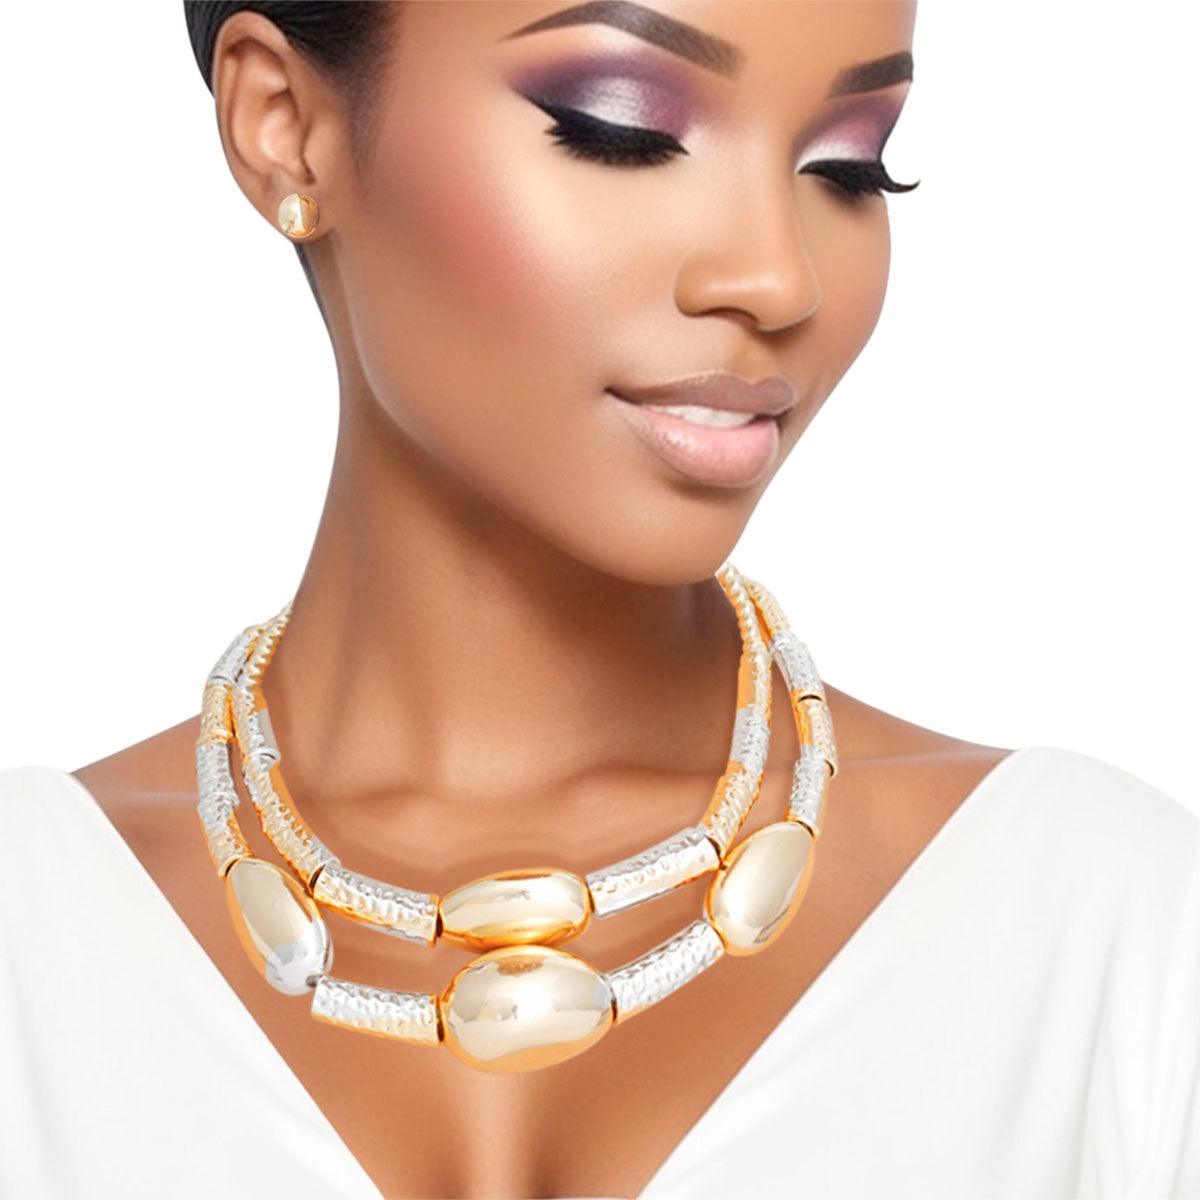 Shine Bright: Gold & Silver Beads Mixer Necklace Set - Fashion Jewelry